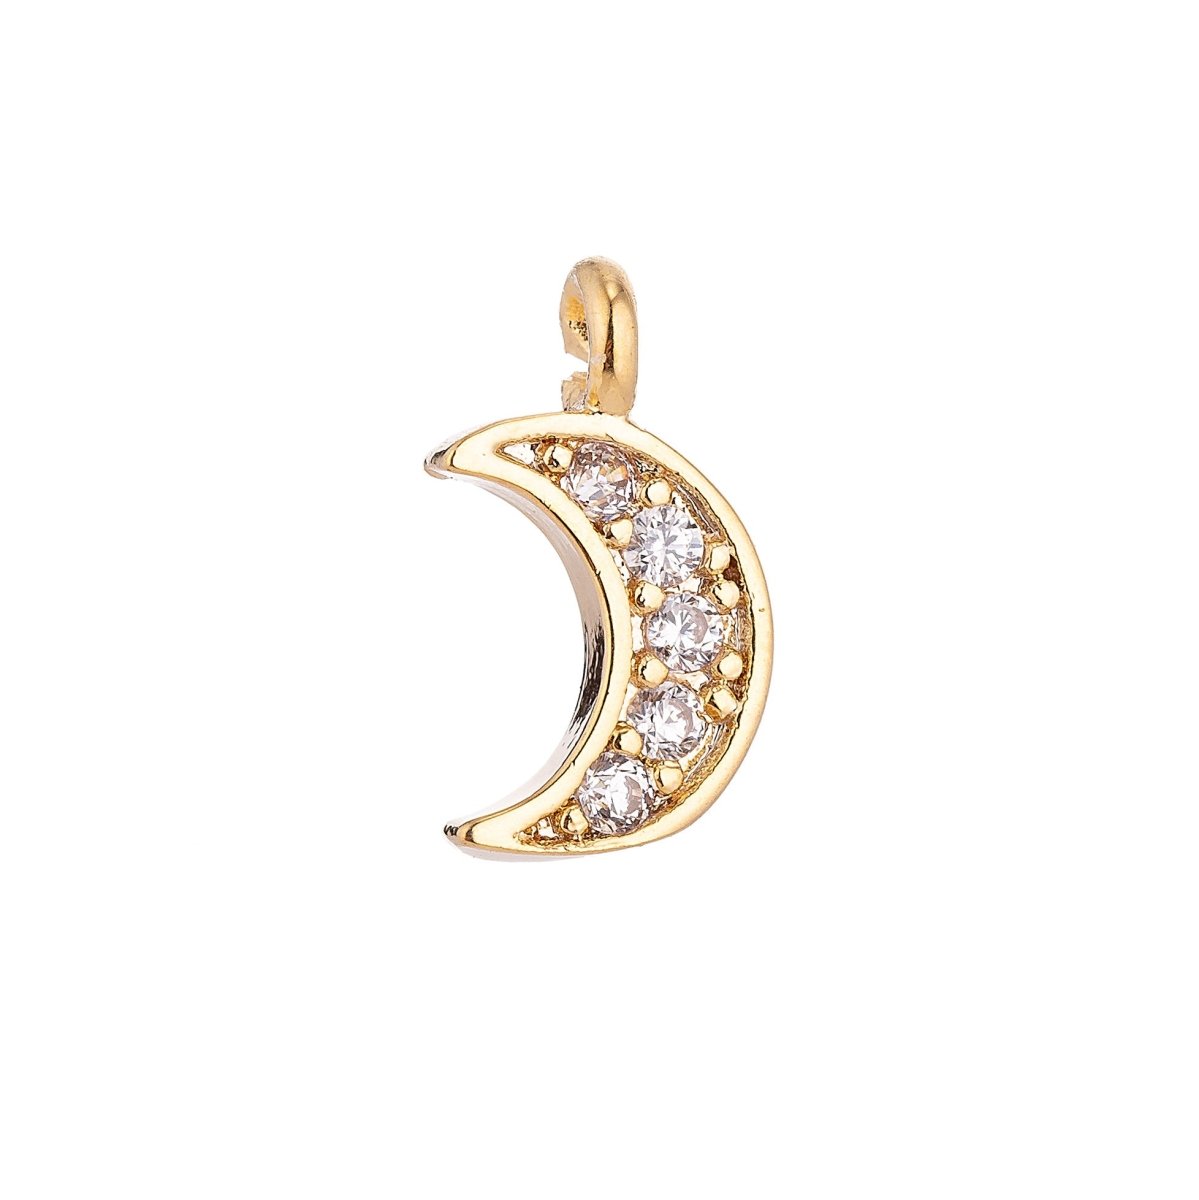 Tiny Mini Crescent Moon Charm Pendant 18K Gold Filled / White Gold C-017 - DLUXCA